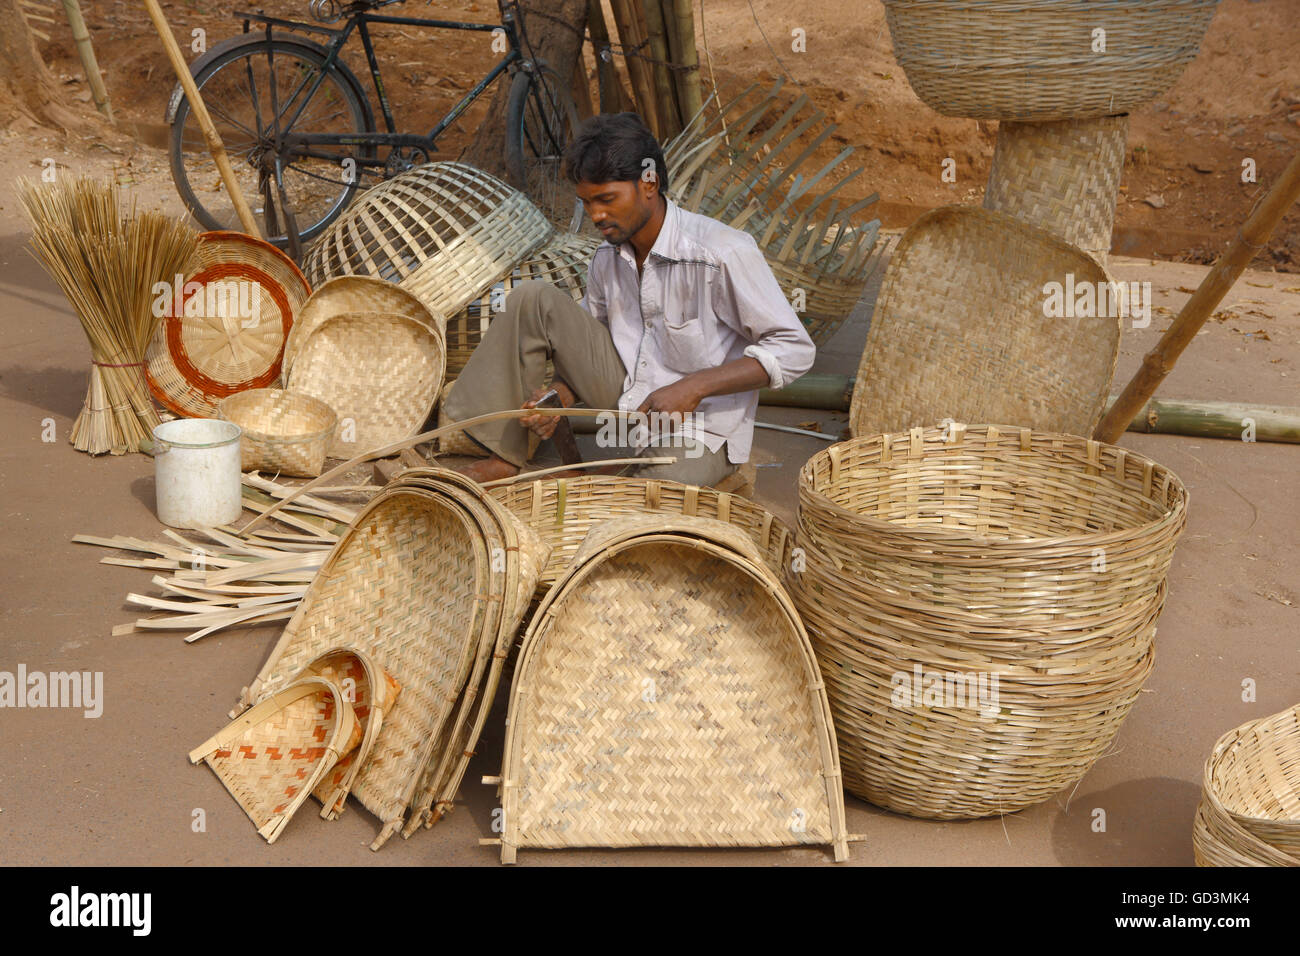 Handicrafts of India: September 2014